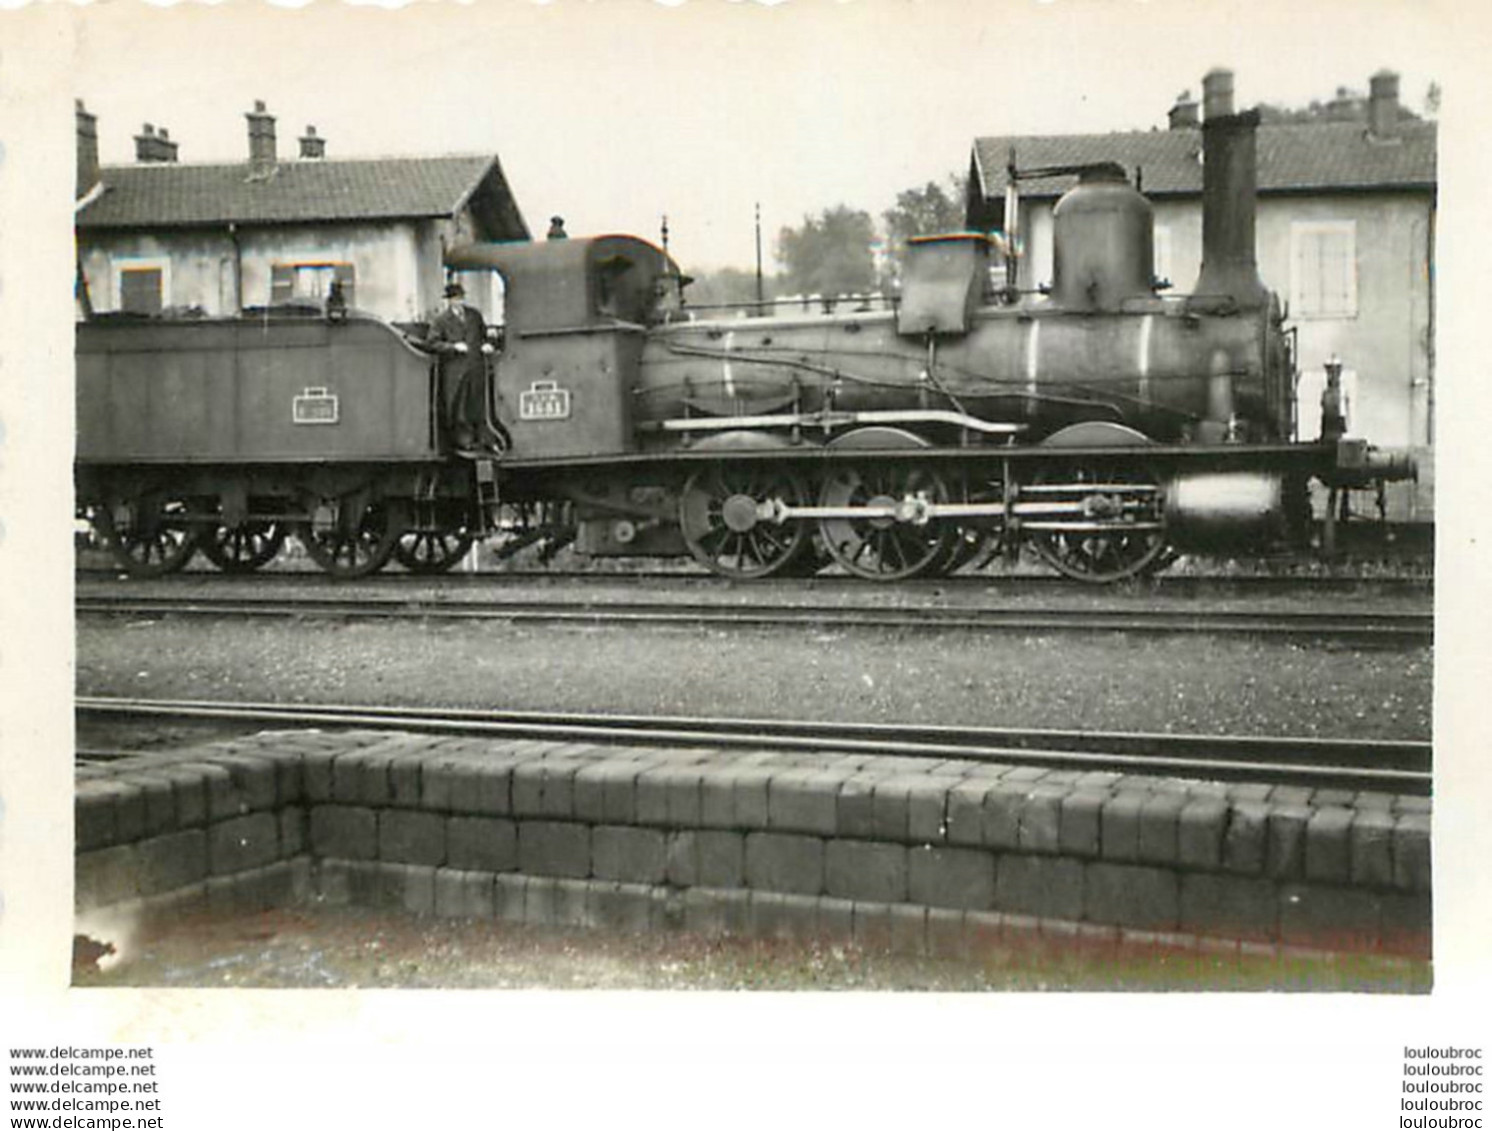 TRAIN EN GARE PHOTO ORIGINALE 8.50 X 6 CM - Eisenbahnen